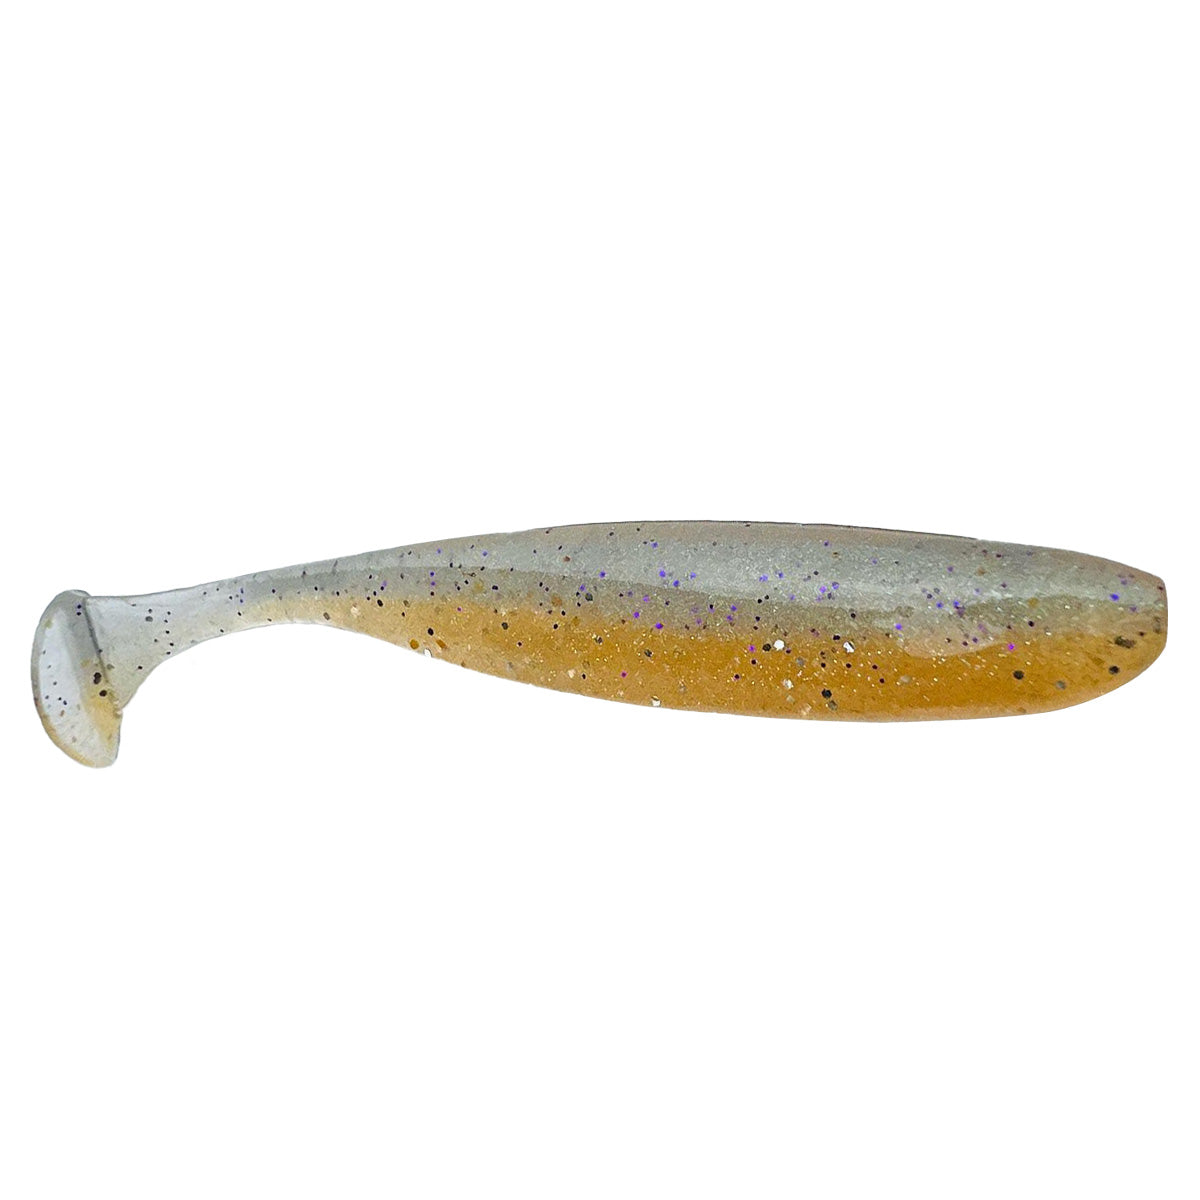 Keitech Easy Shiner 3 inch Soft Plastic Fishing Lure